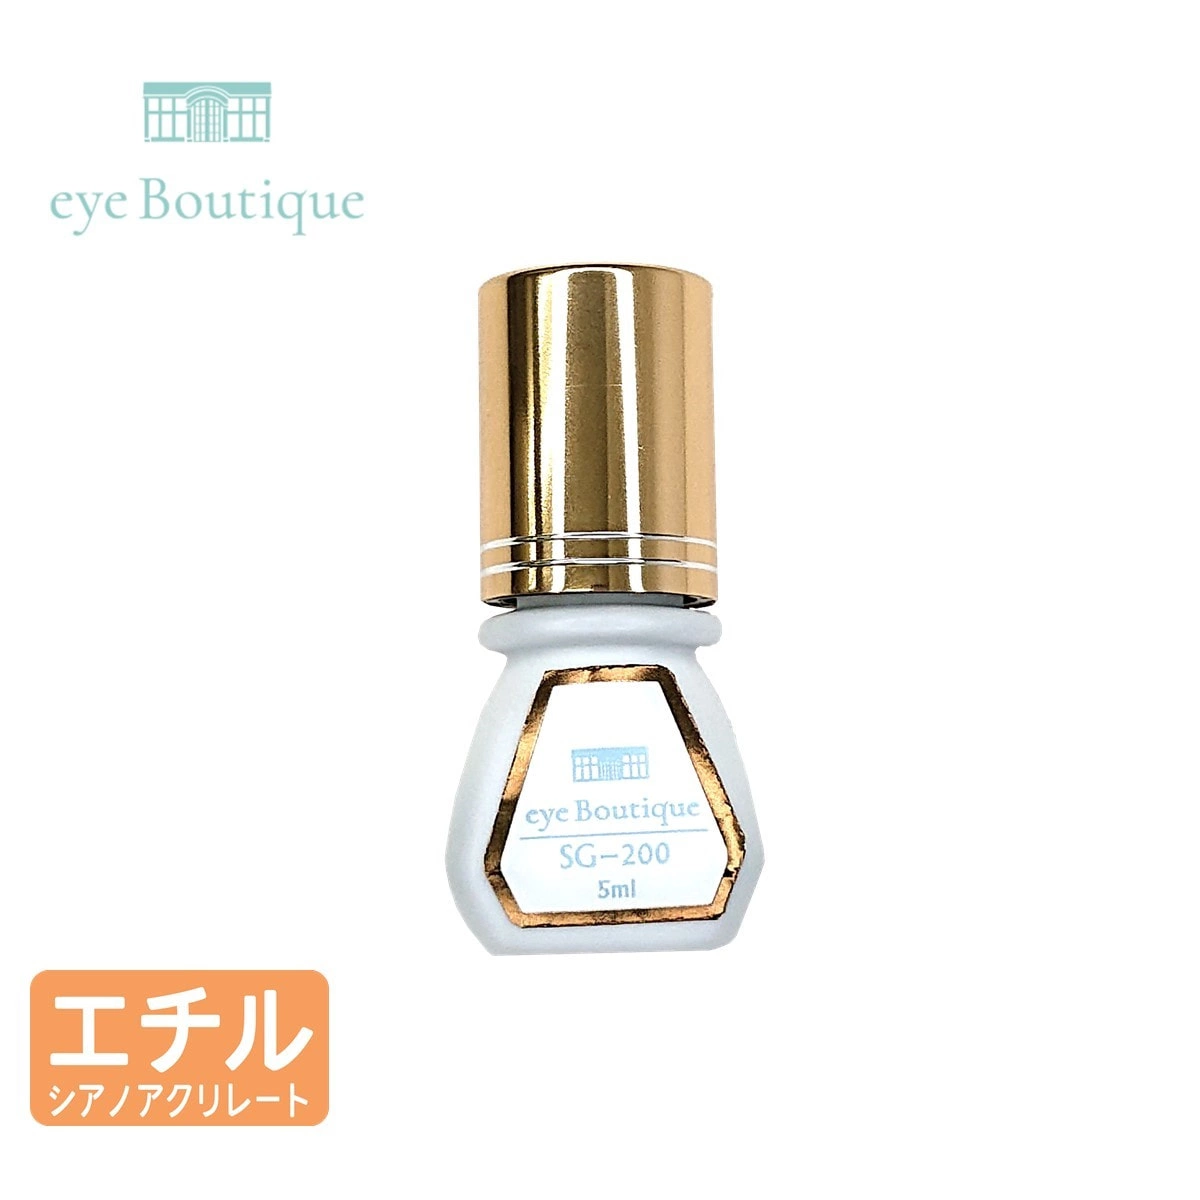 【eye Boutique】セットアップグルー SG-200 5ml